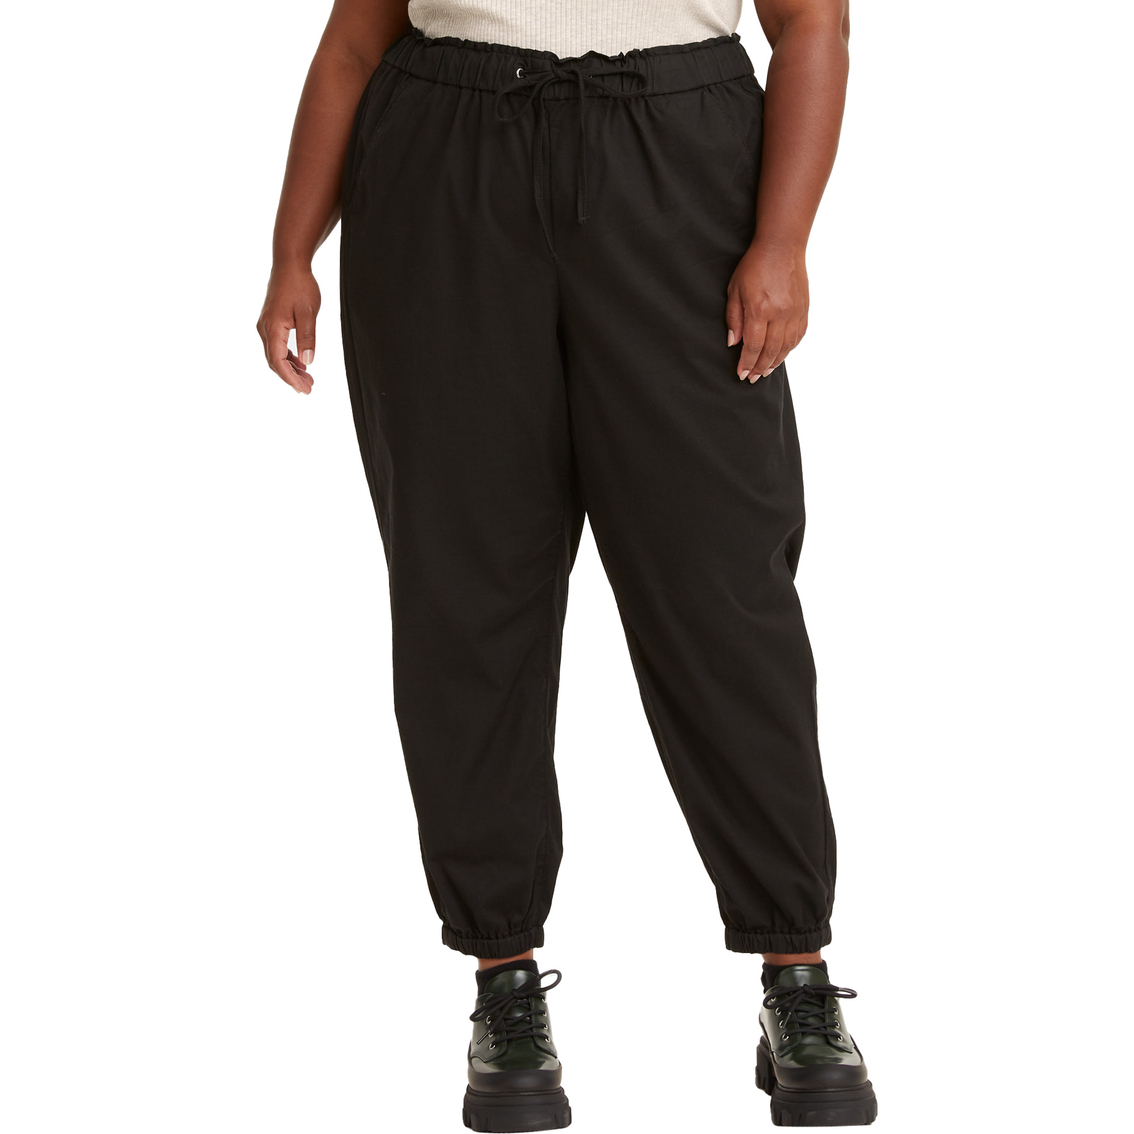 Levi's Plus Size Off Duty Joggers | Pants | Clothing & Accessories ...